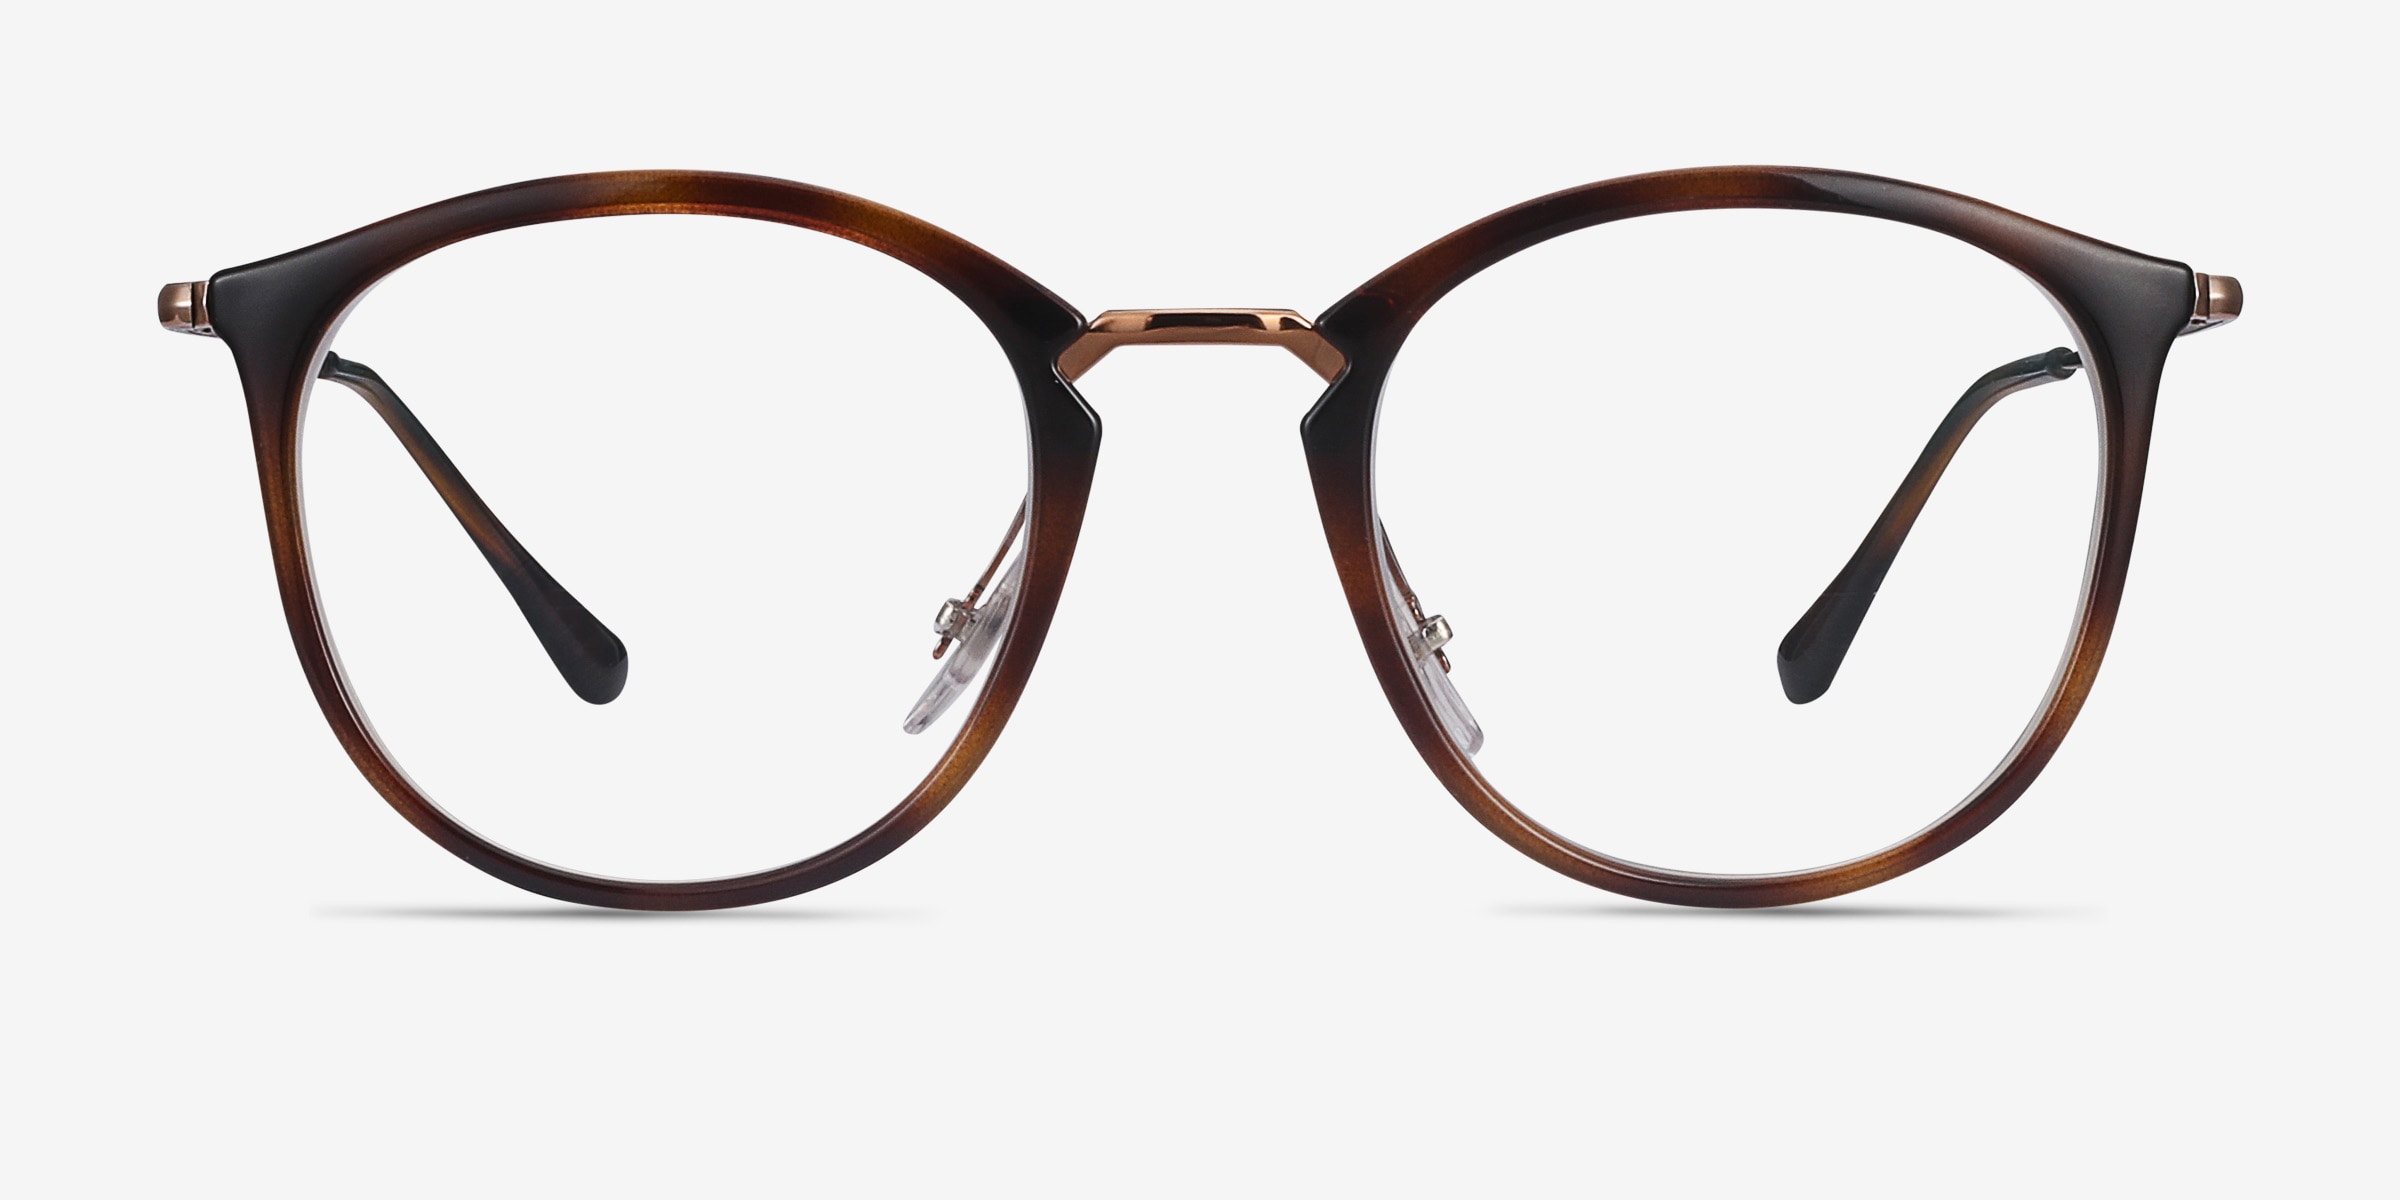 Ray-Ban RB7140 - Round Tortoise Bronze Frame Glasses For Women 